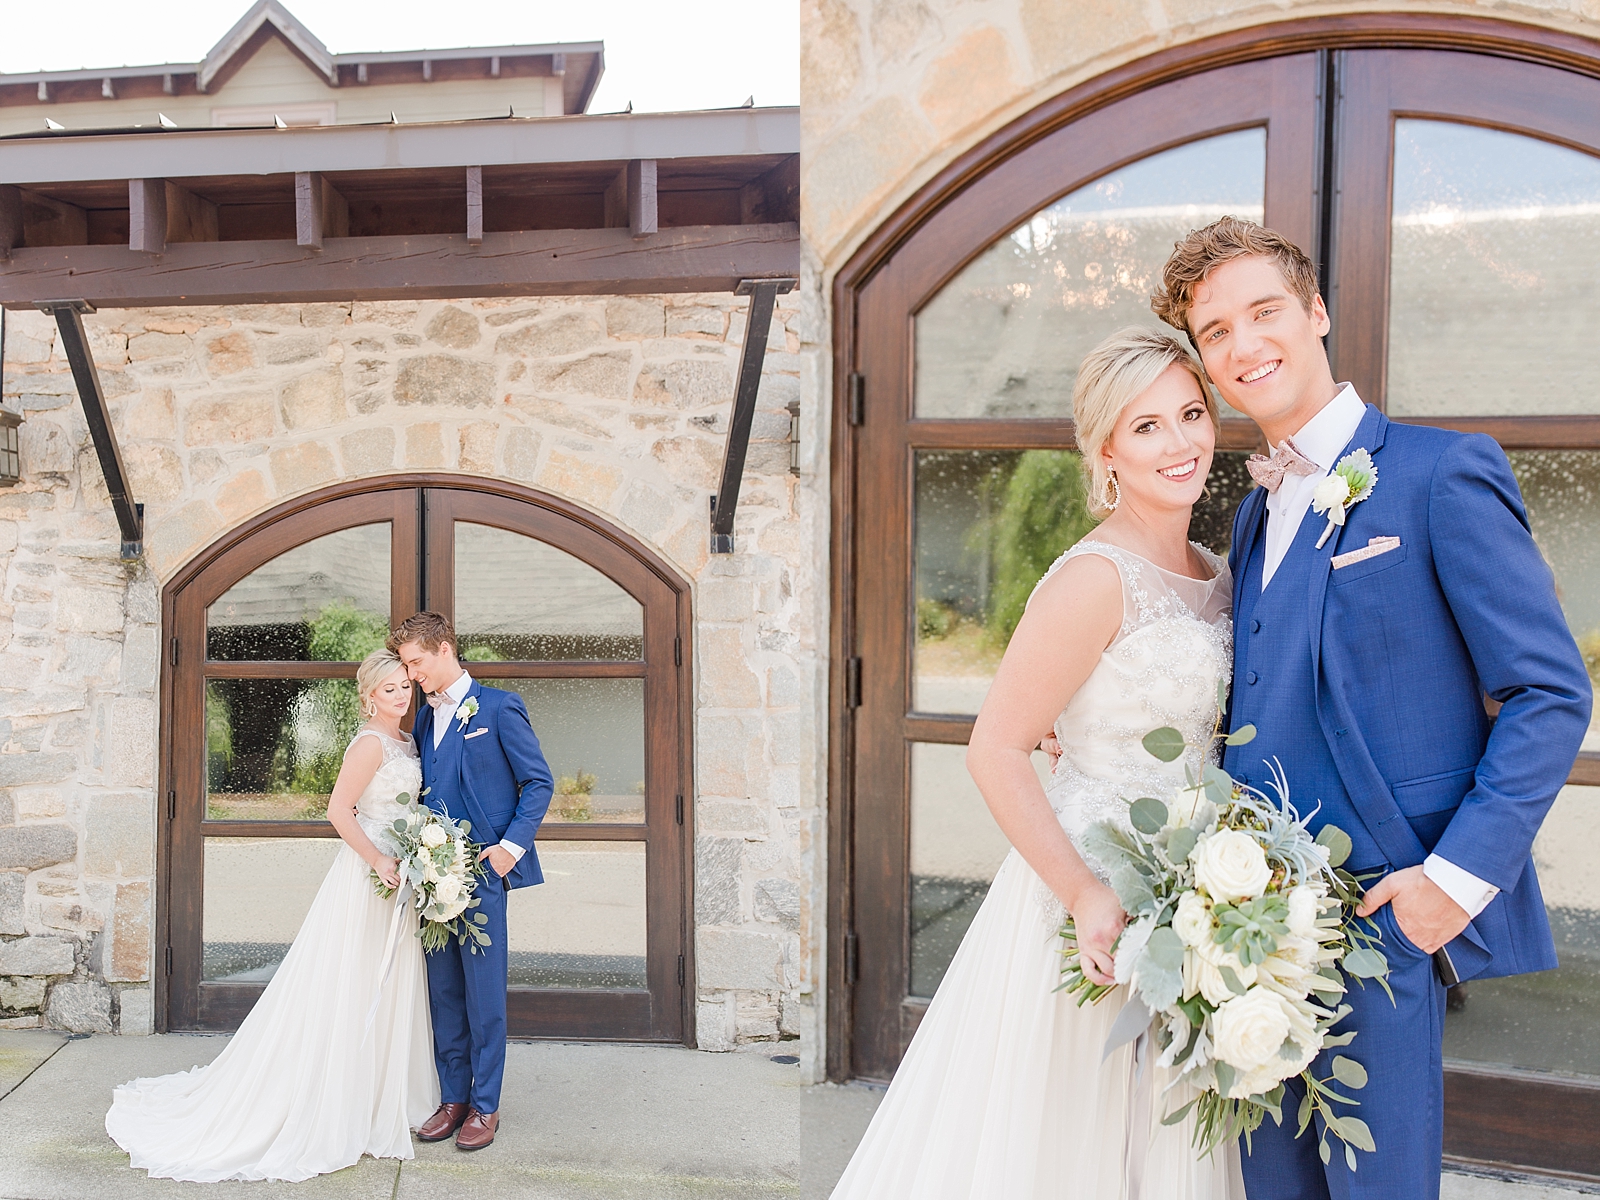 Atlanta Georgia Wedding bride and groom in front of arched doorway smiling Photos